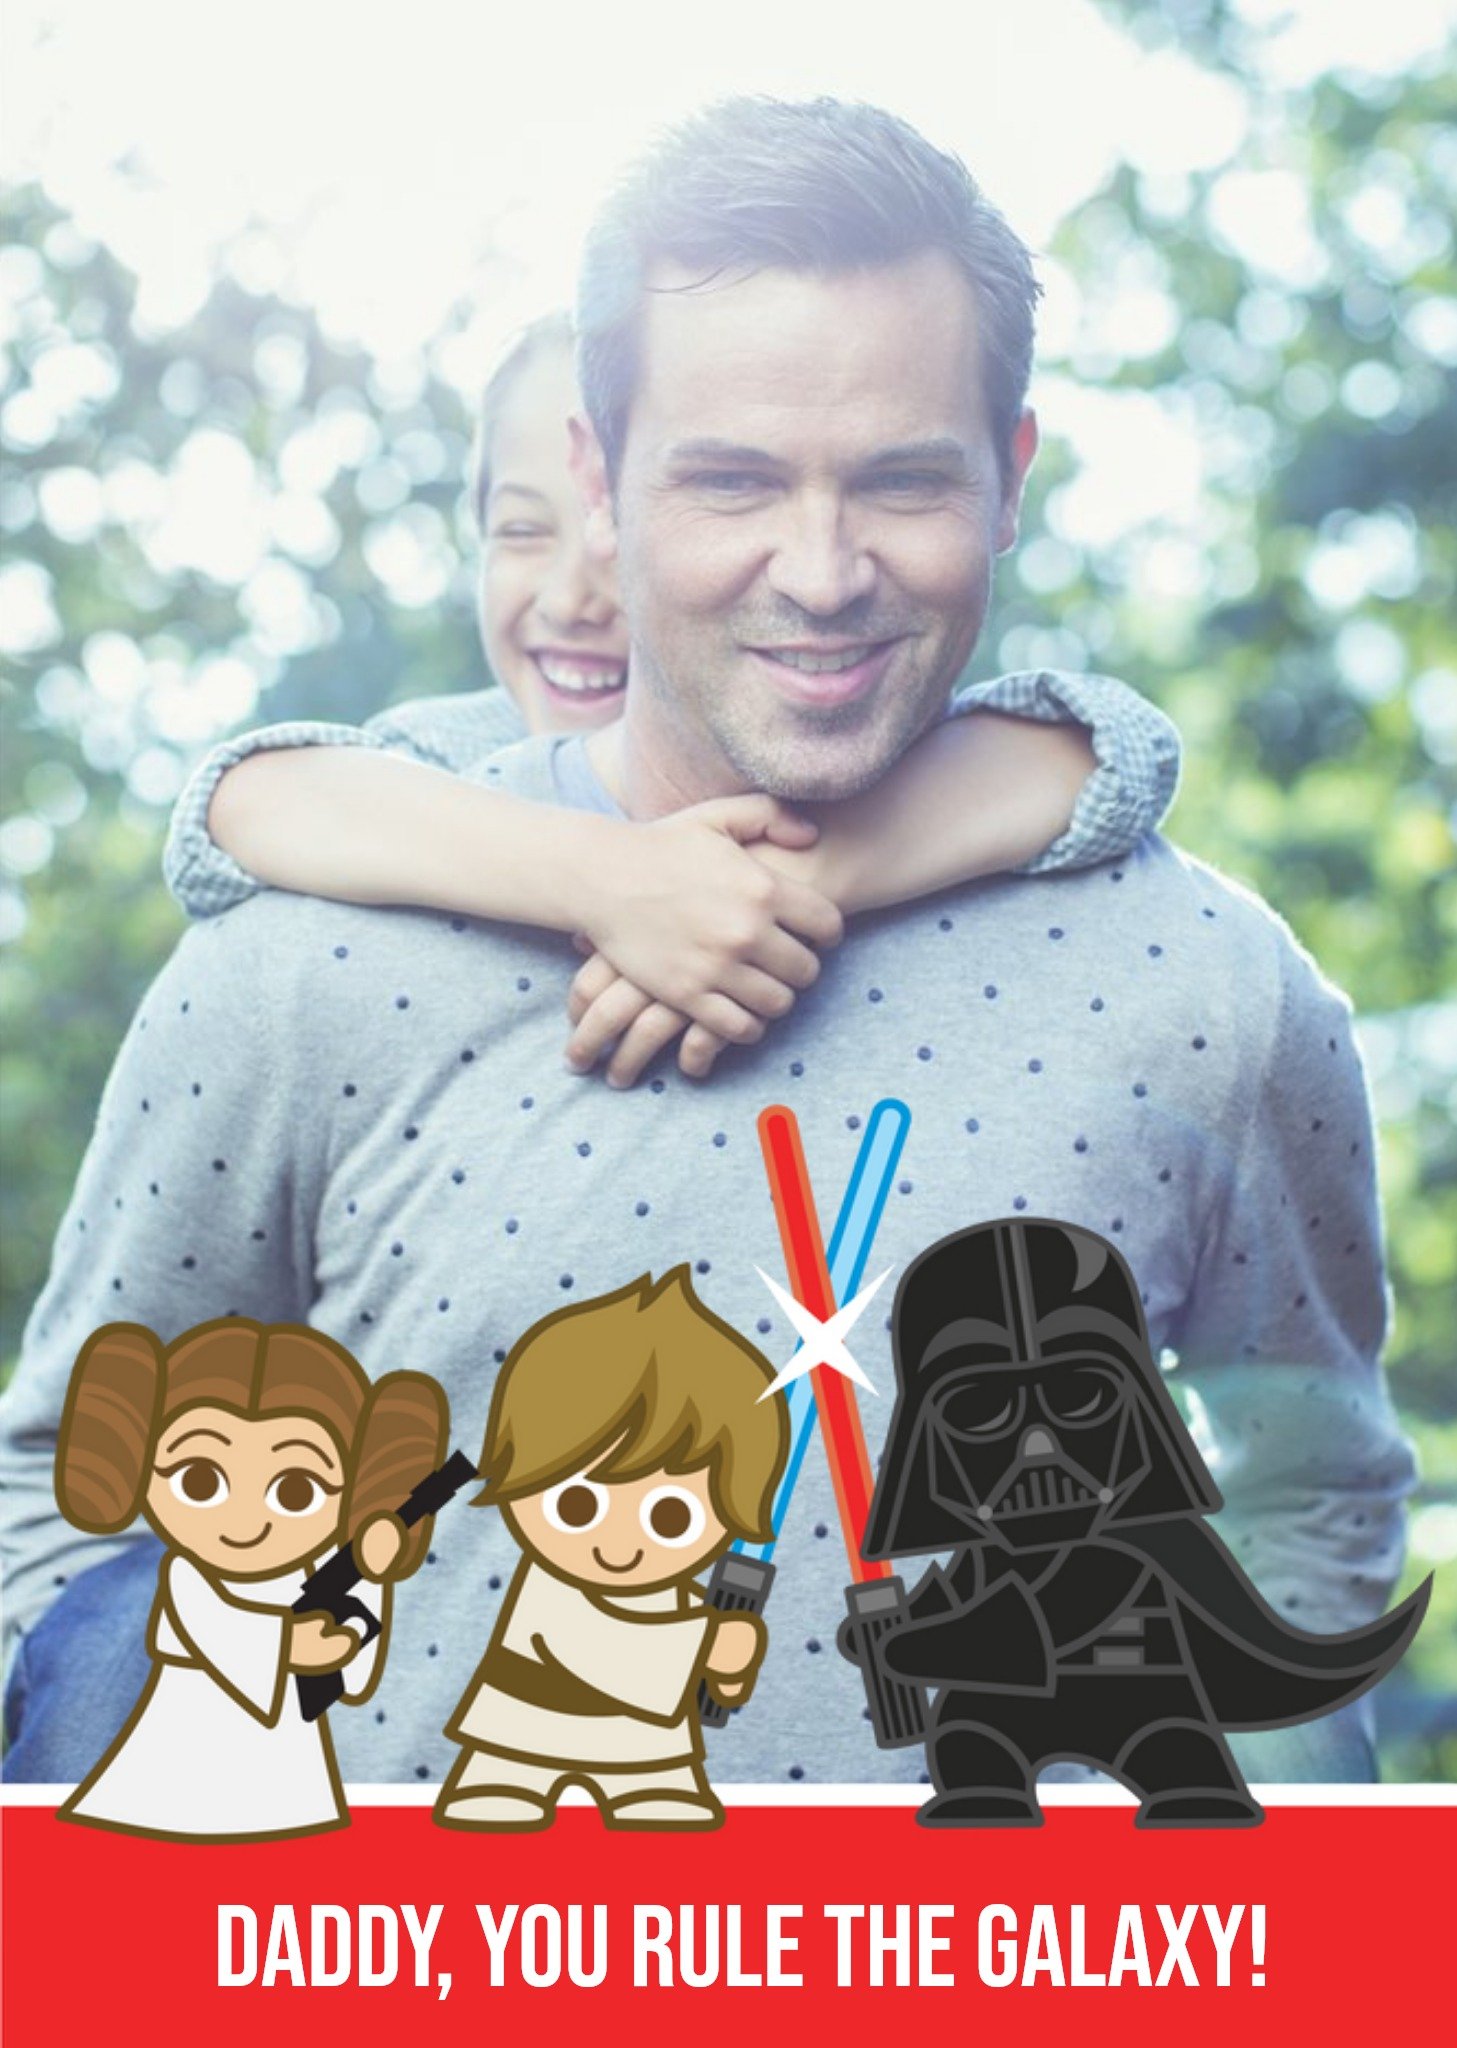 Disney Star Wars Cartoon Characters Photo Upload Card Ecard